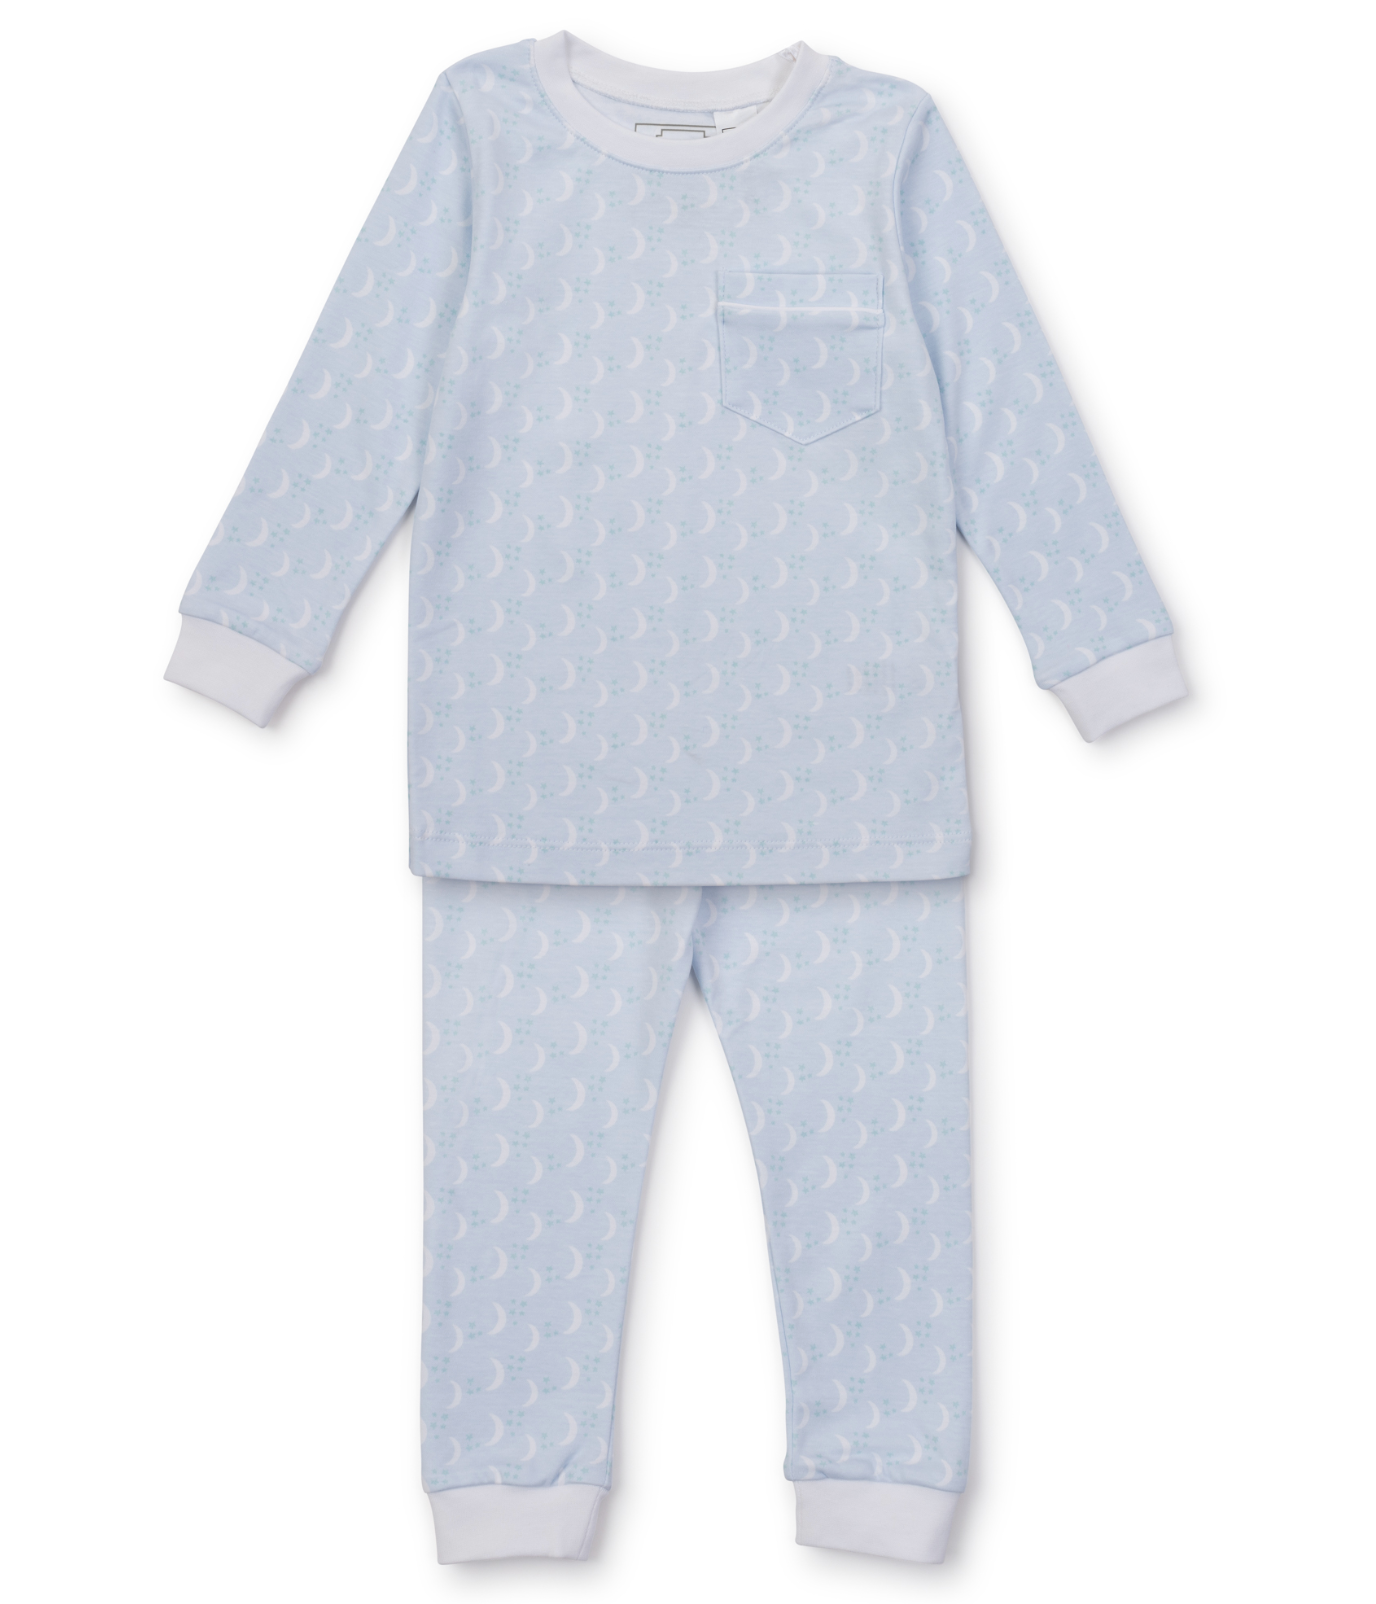 Bradford Pajama Set-Goodnight Moon (Baby)